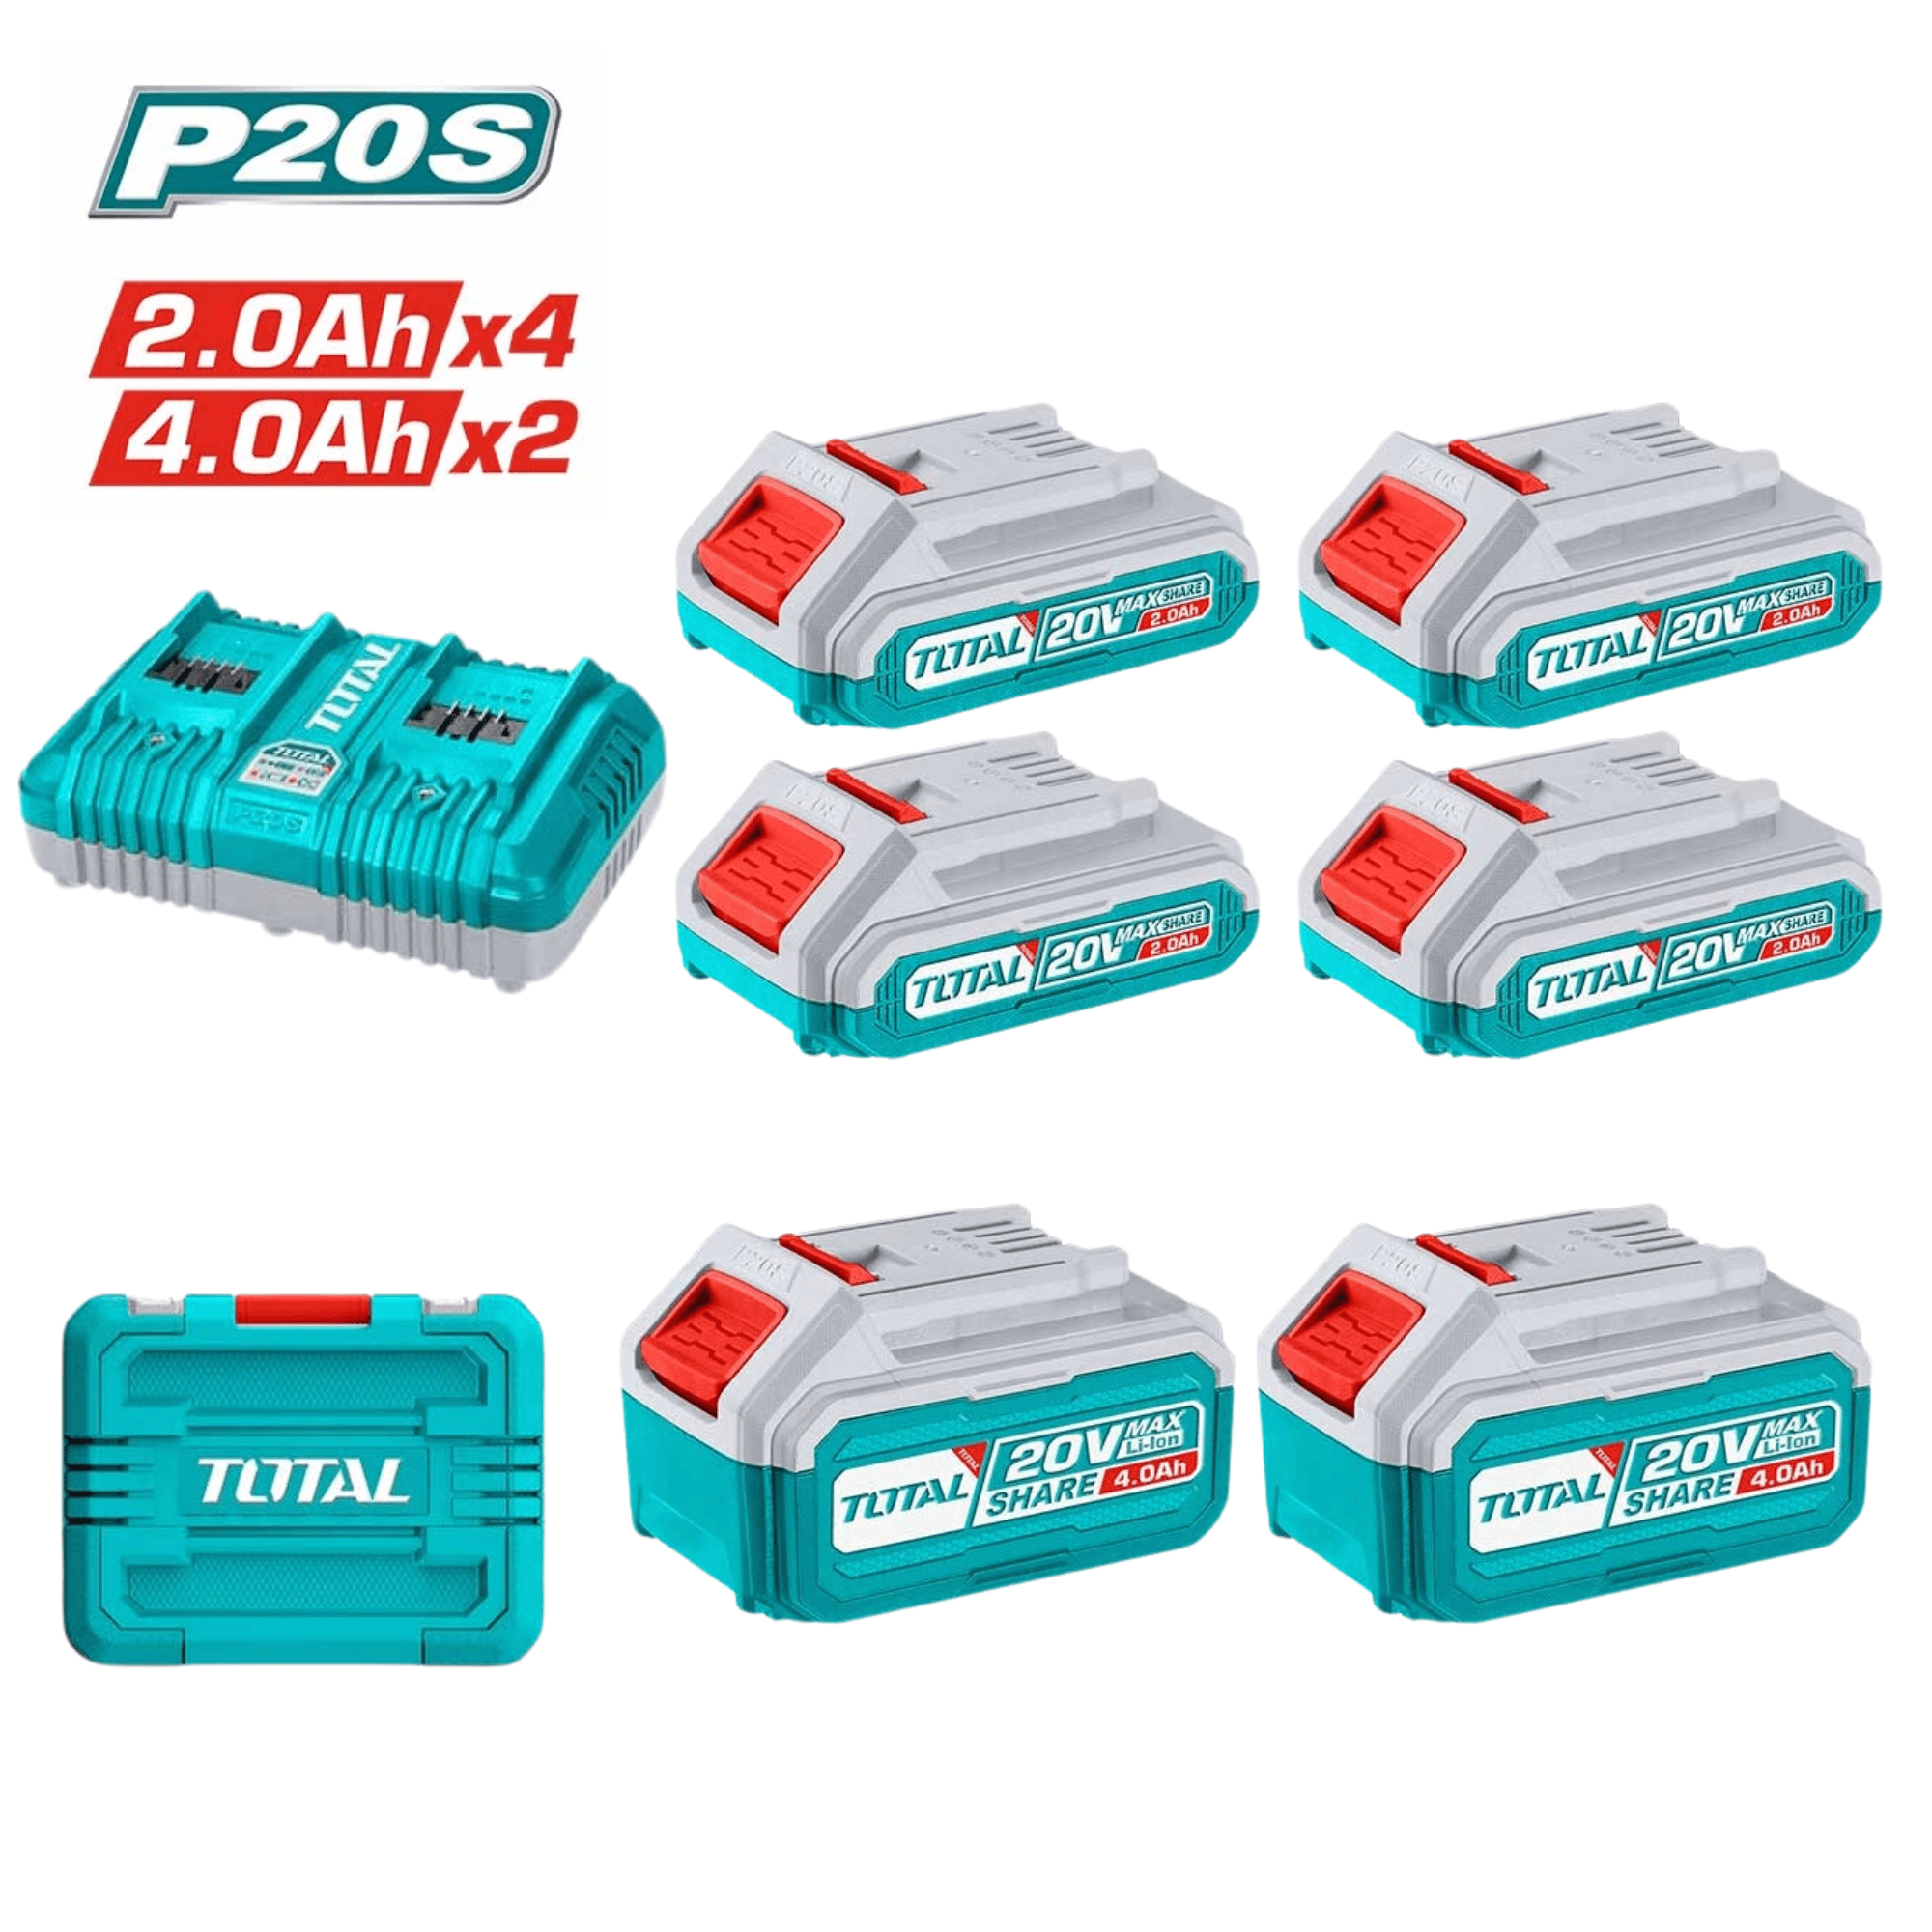 Pack 2 Baterias 20v 4ah + 4 Baterías 20v 2ah + Cargador Total TOSLI230701